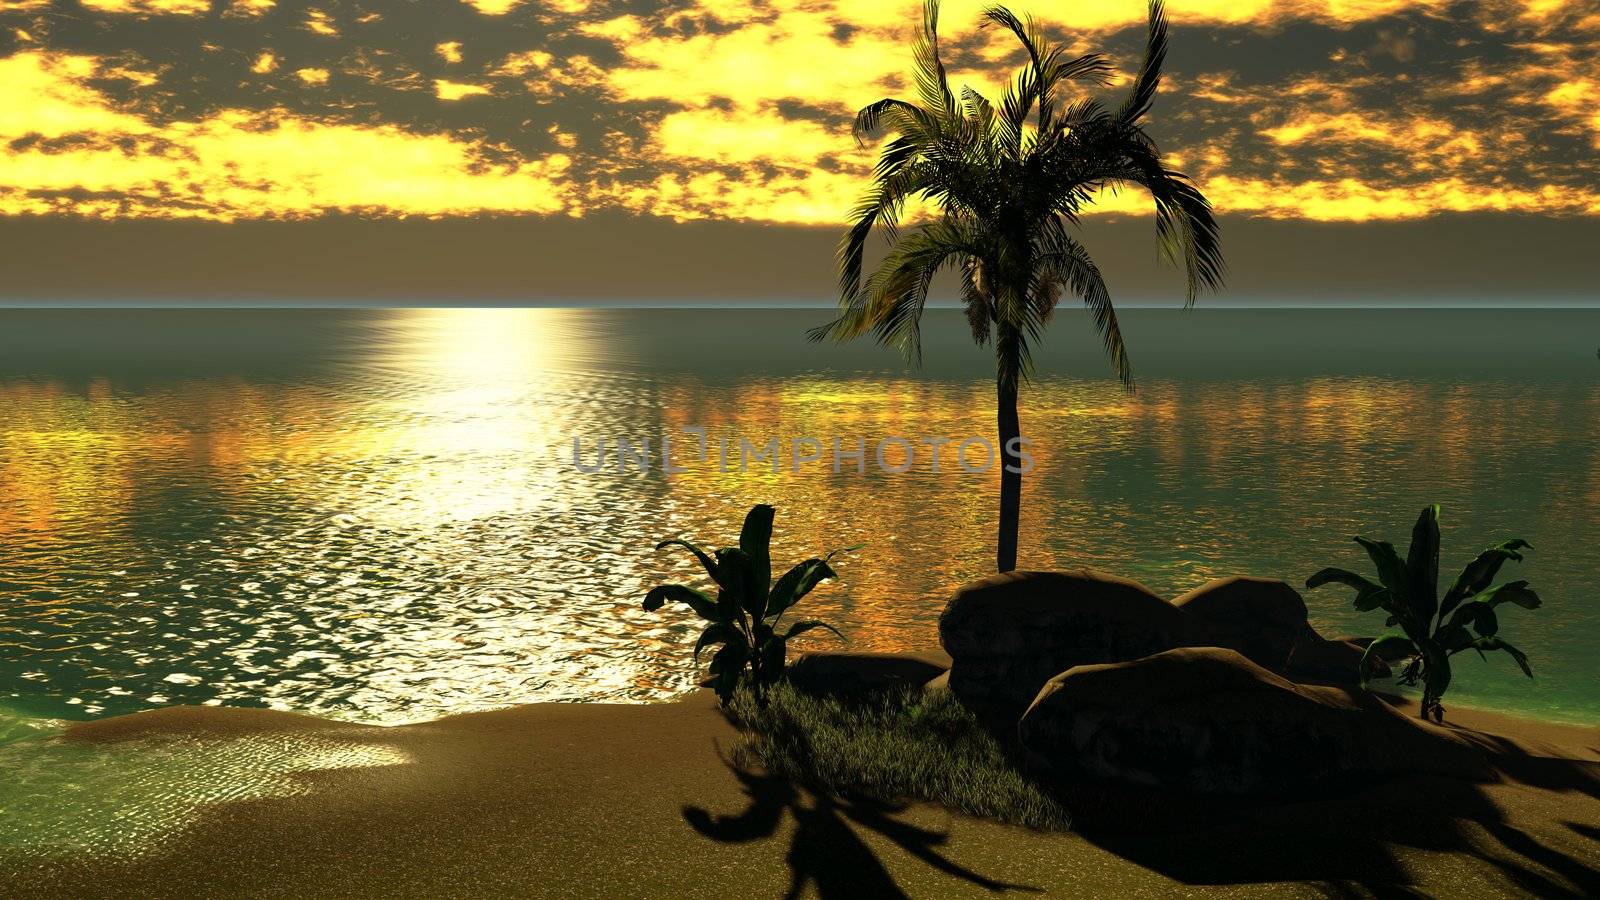 Hawaiian sunset in tropical paradise by andromeda13